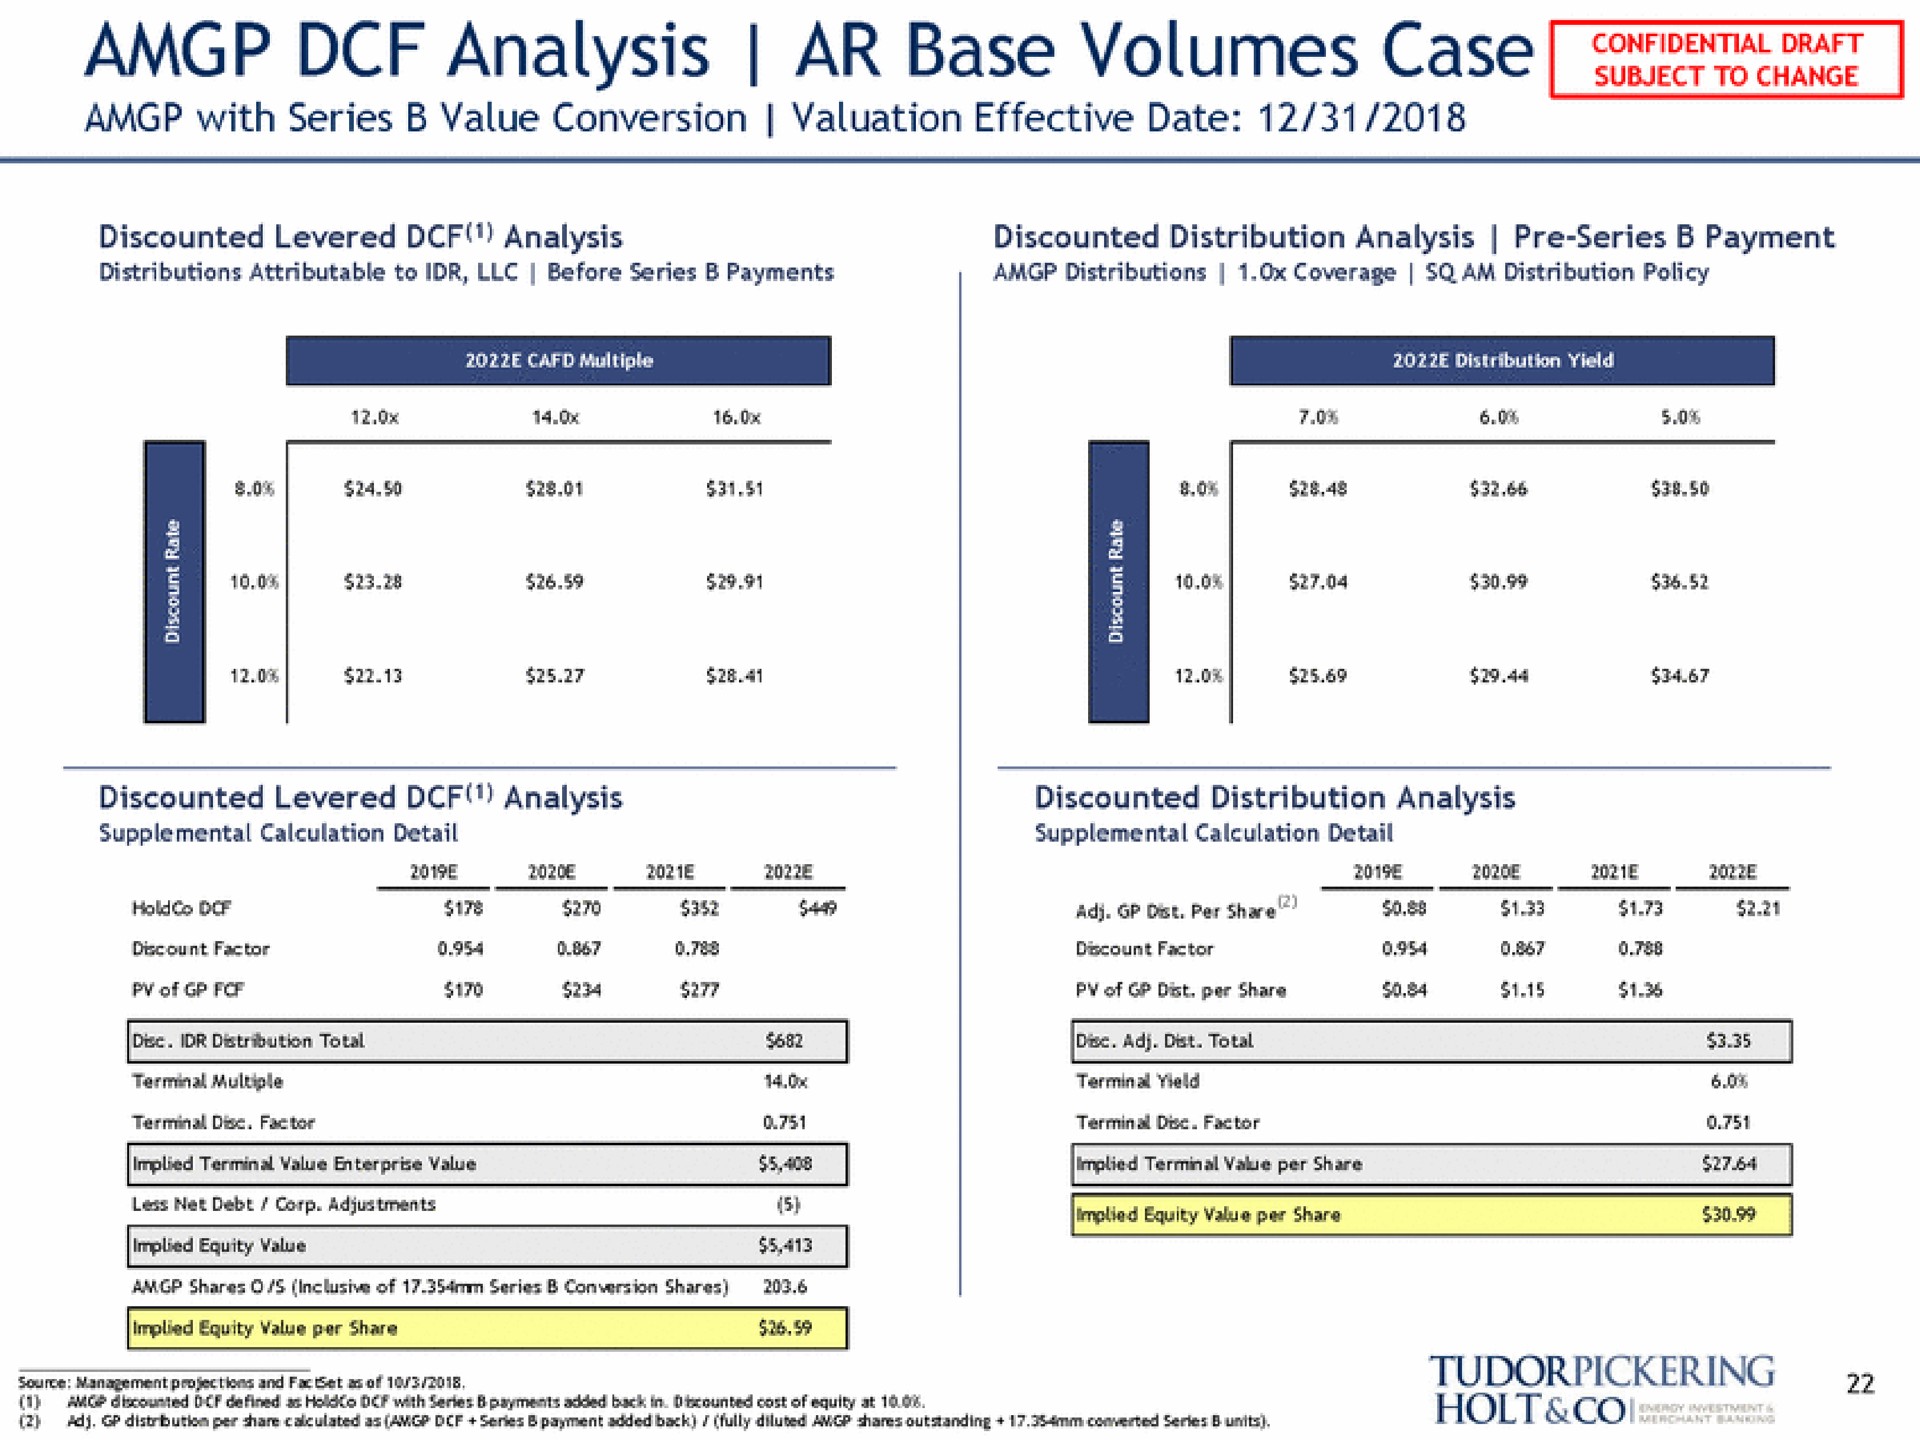 analysis base volumes case holds sam | Tudor, Pickering, Holt & Co